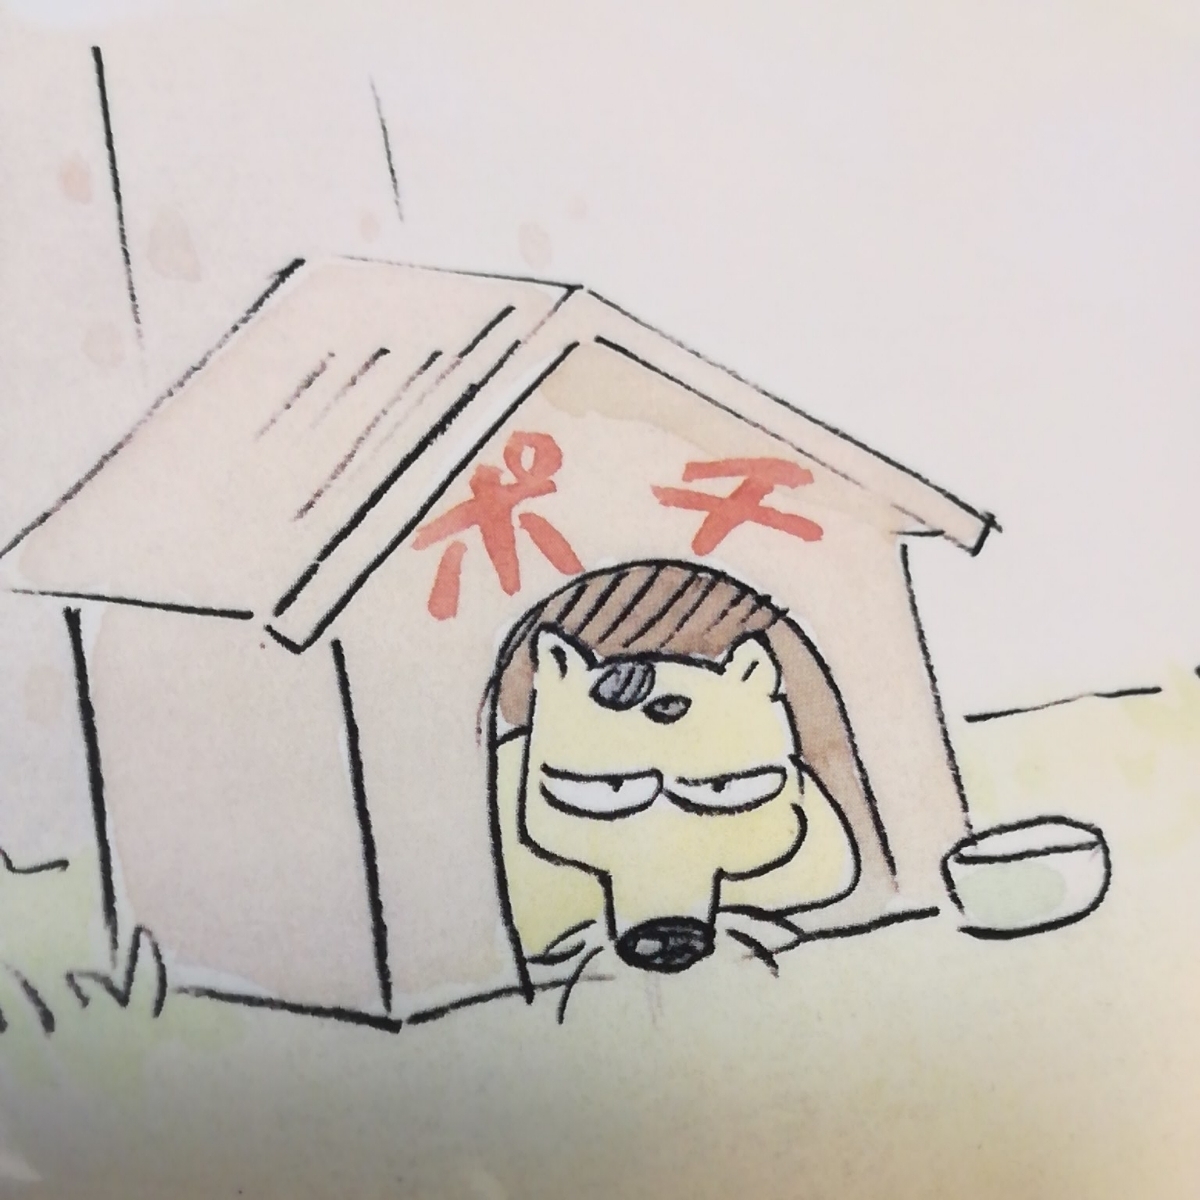 Comes in a protective bag [Original item] My Neighbor Yamada-kun Studio Ghibli Original Art Exhibition [Limited] Postcard.Layout exhibition.Original drawings.Cel drawings.Collector.Lots of Ghibli., comics, anime goods, hand drawn illustration